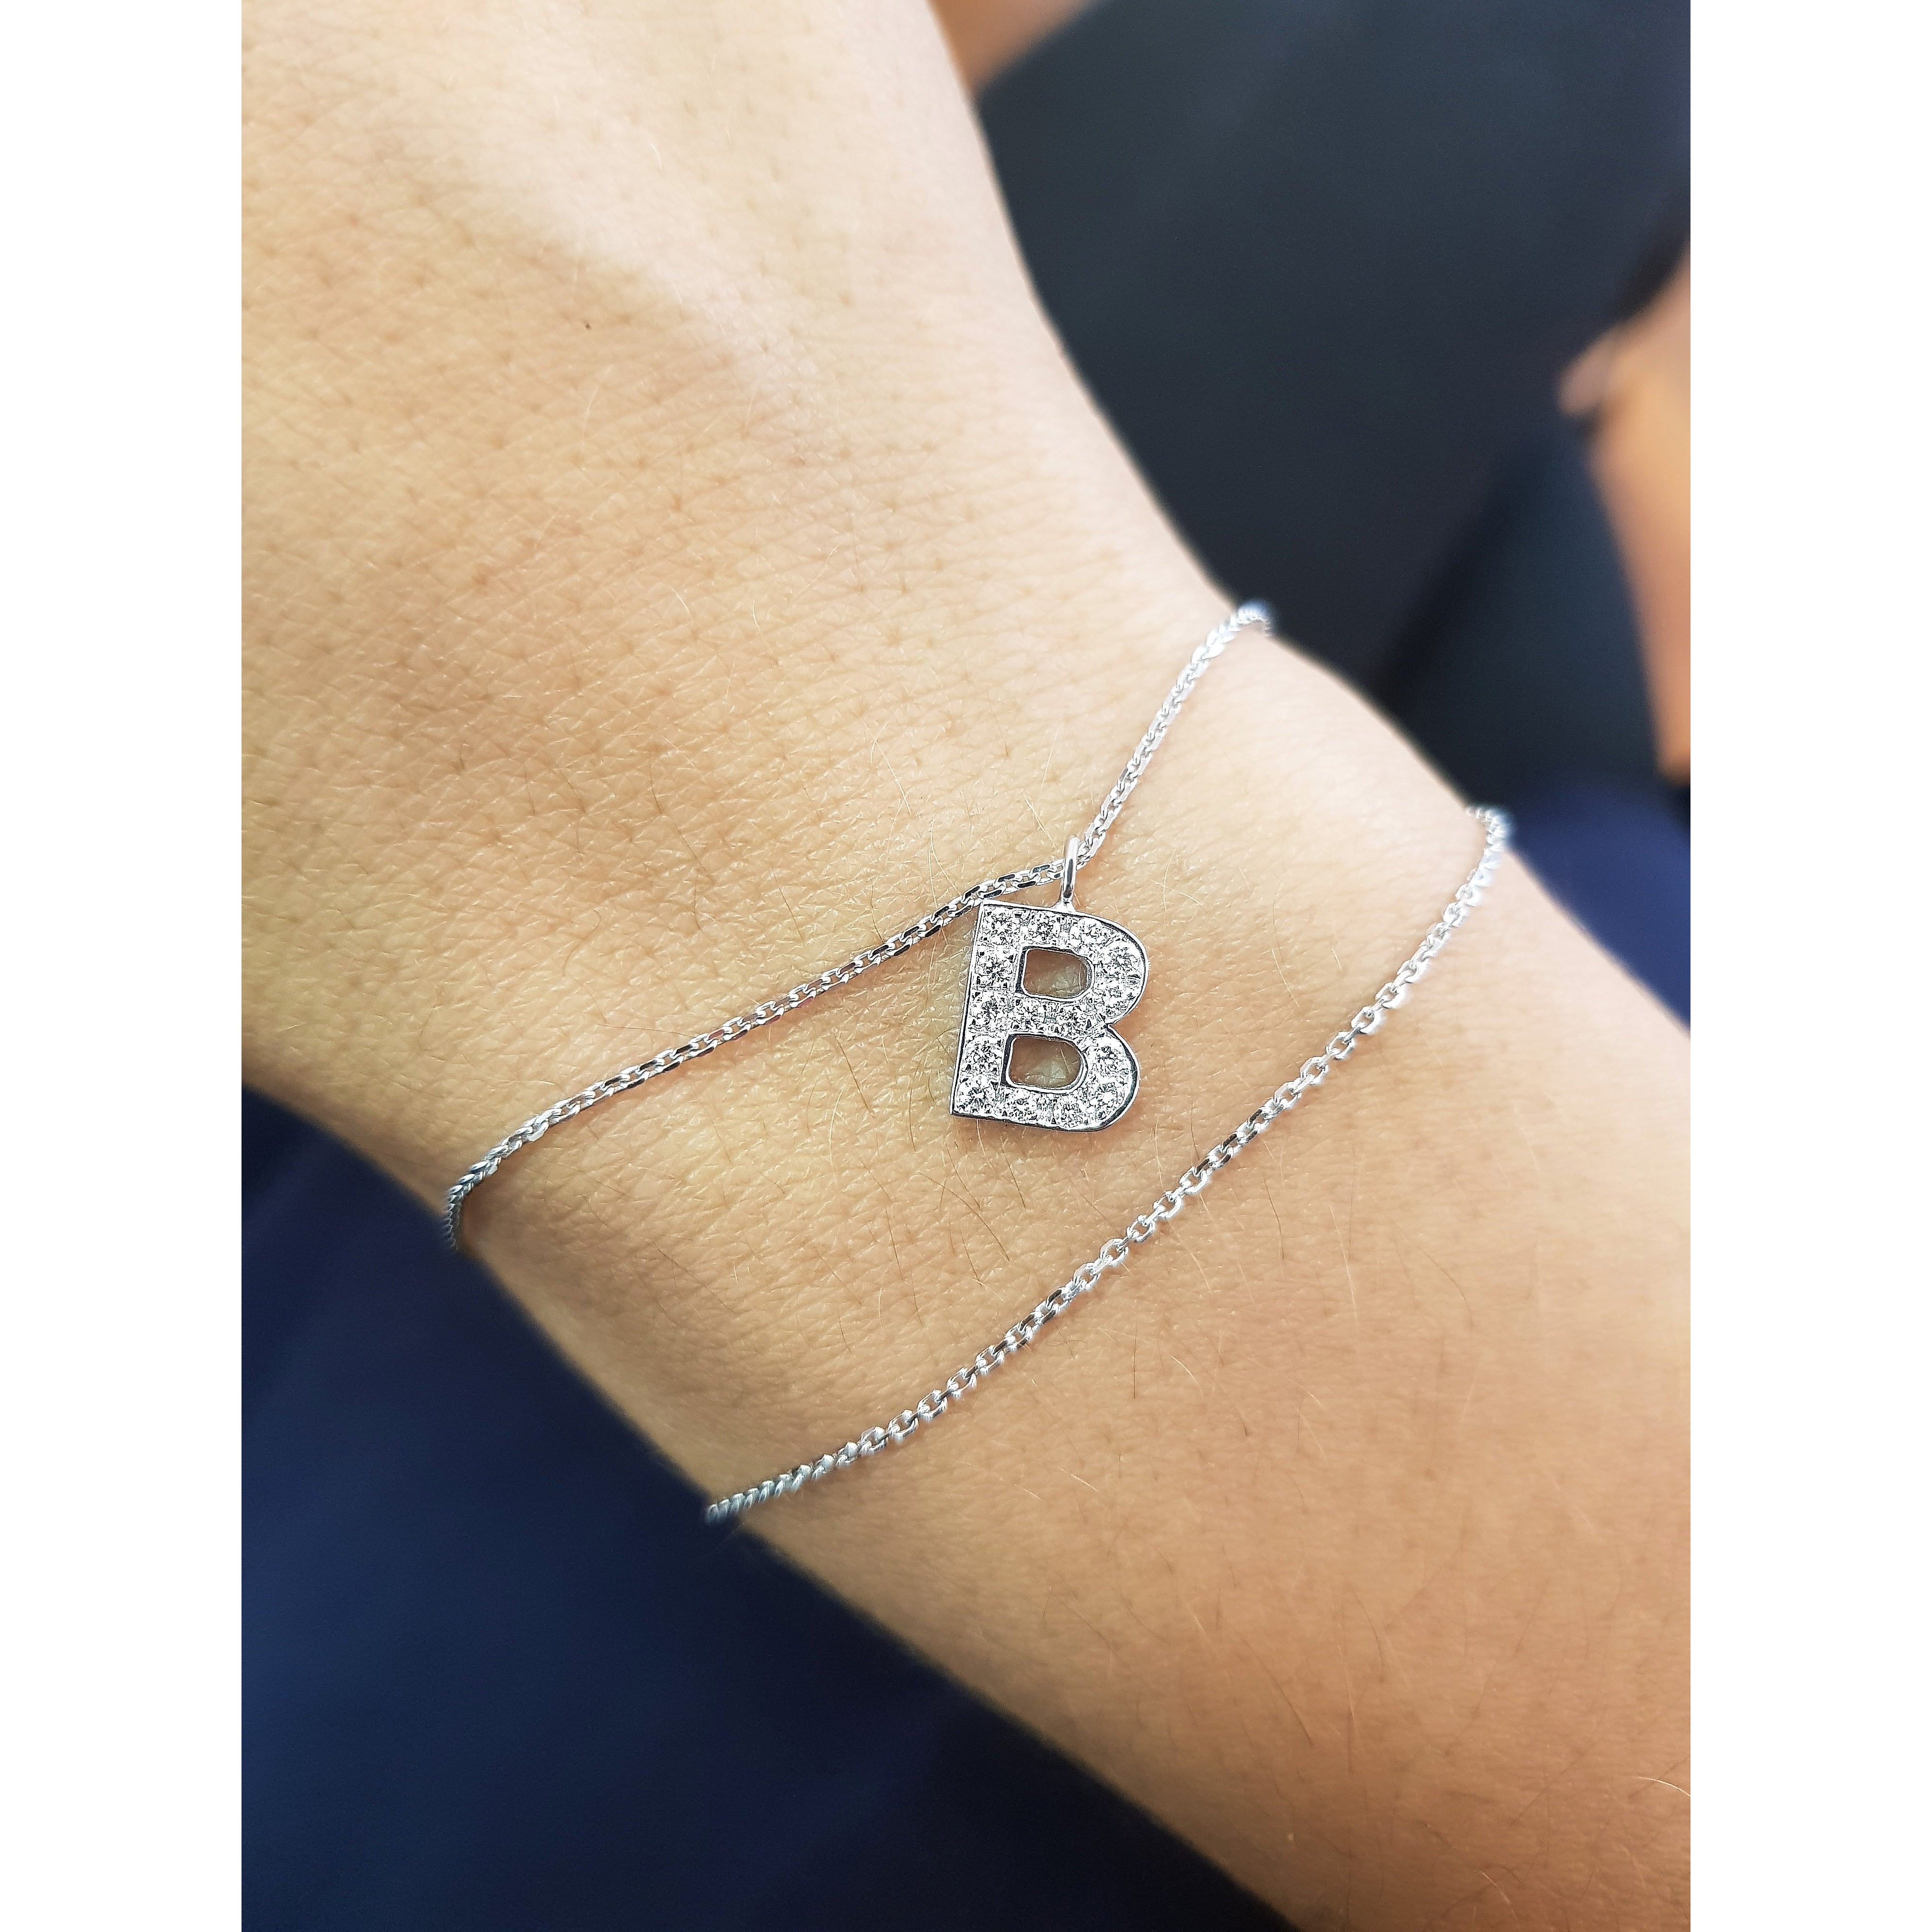 Barbara Letter Diamonds Bracelet   (0.15 Carat) -14K White Gold (RTS)